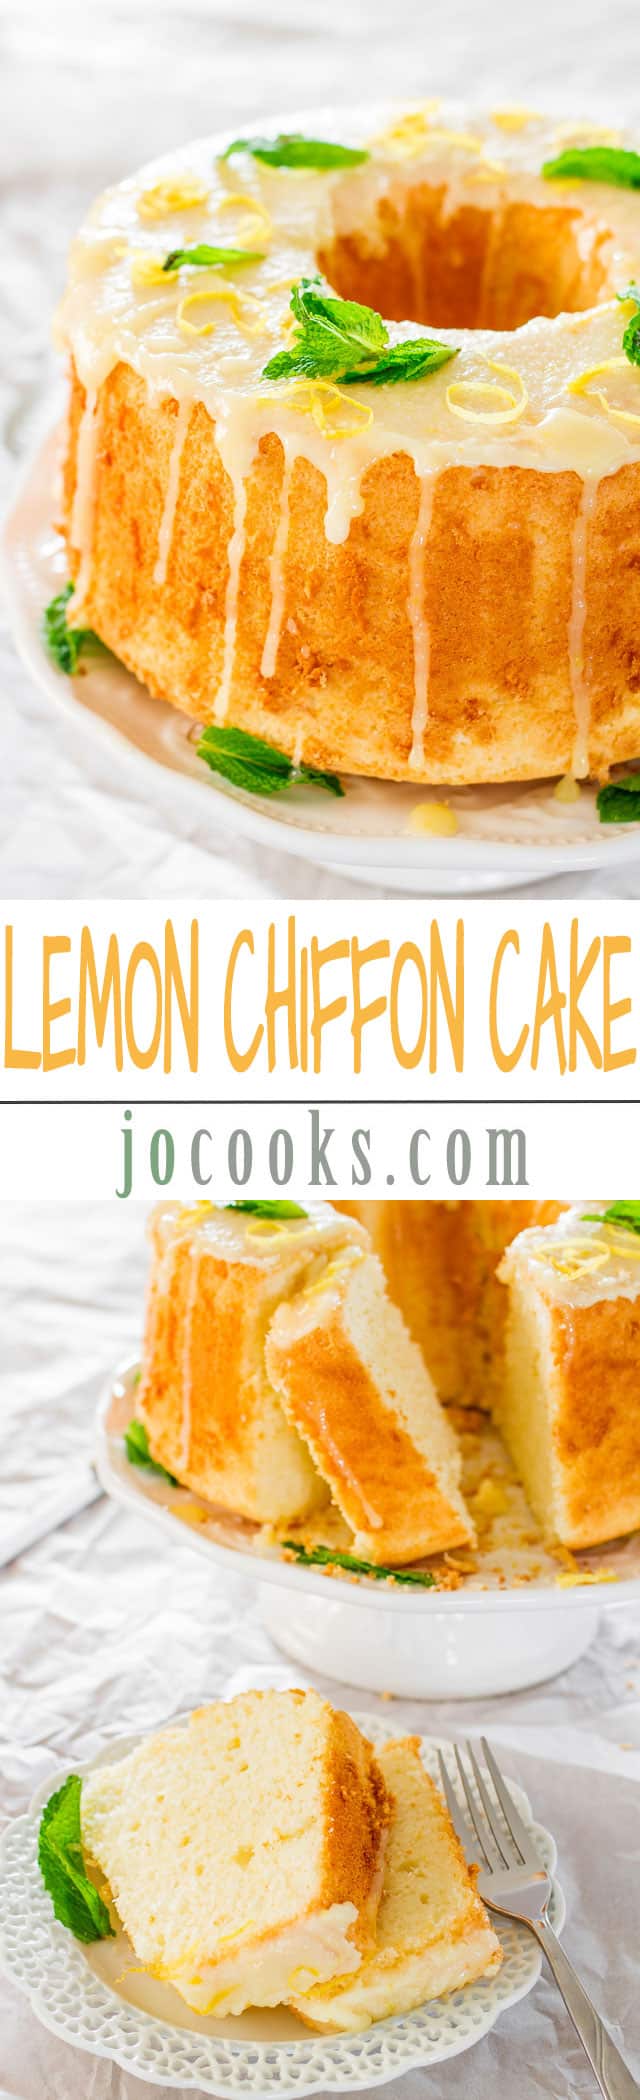 Lemon Chiffon Cake photo collage